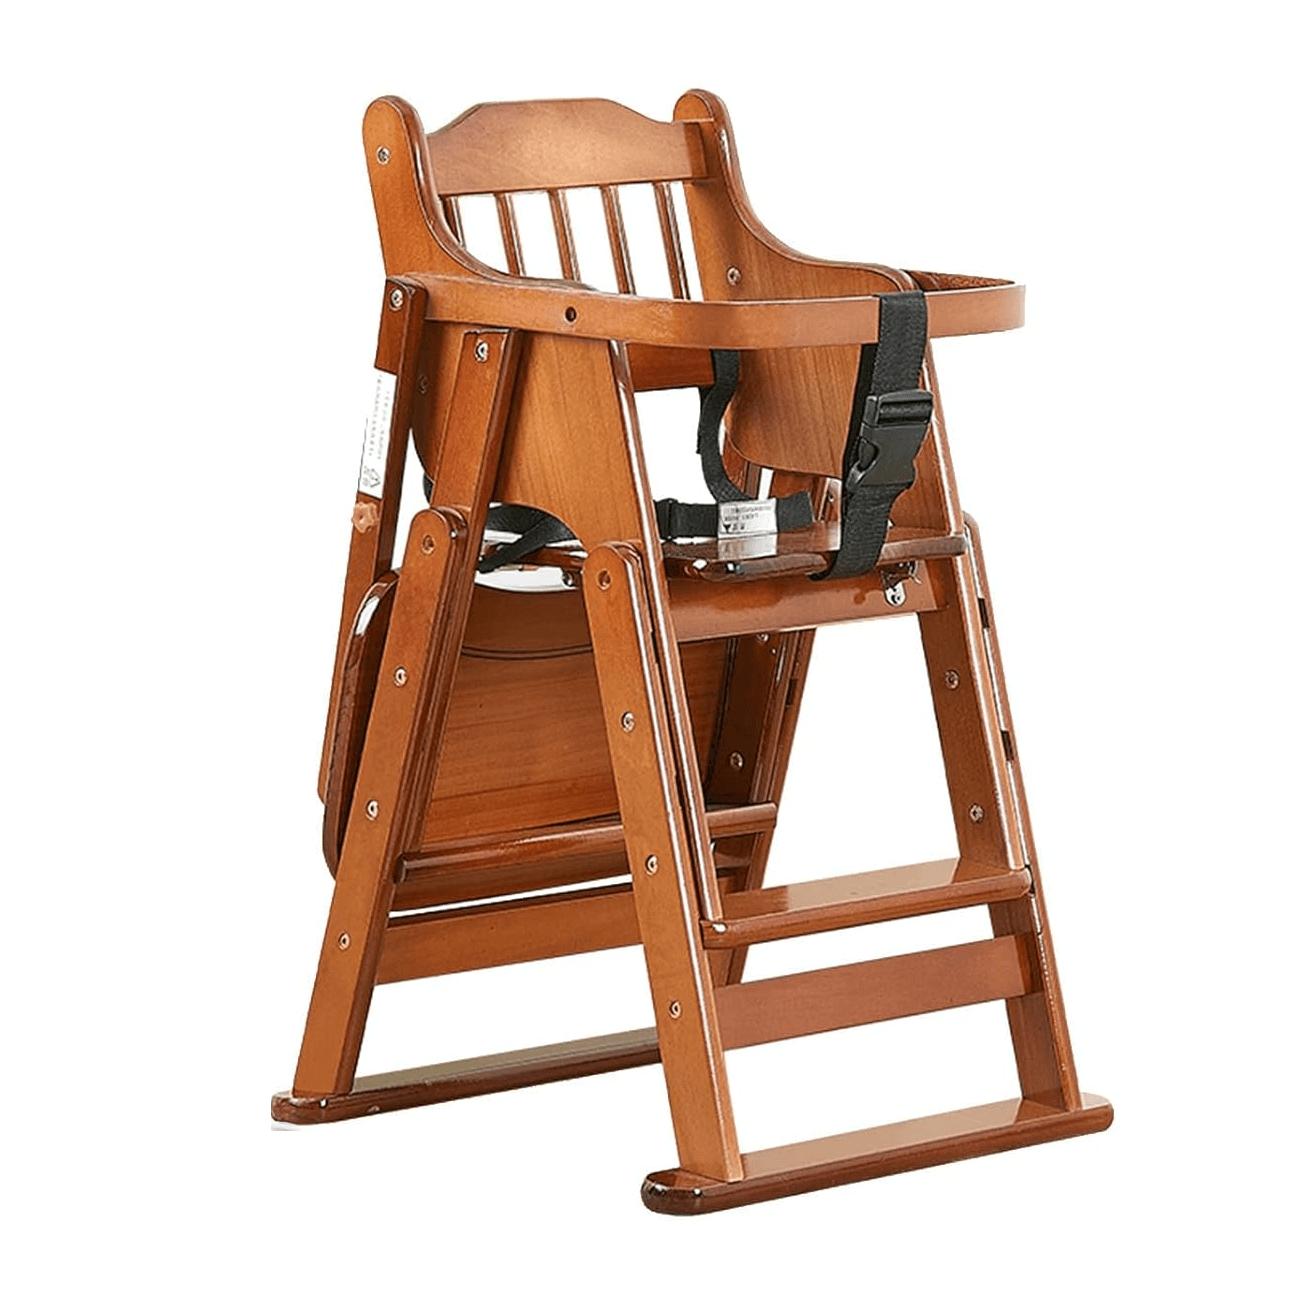 Montessori WGLAWL High Chair With Tray B